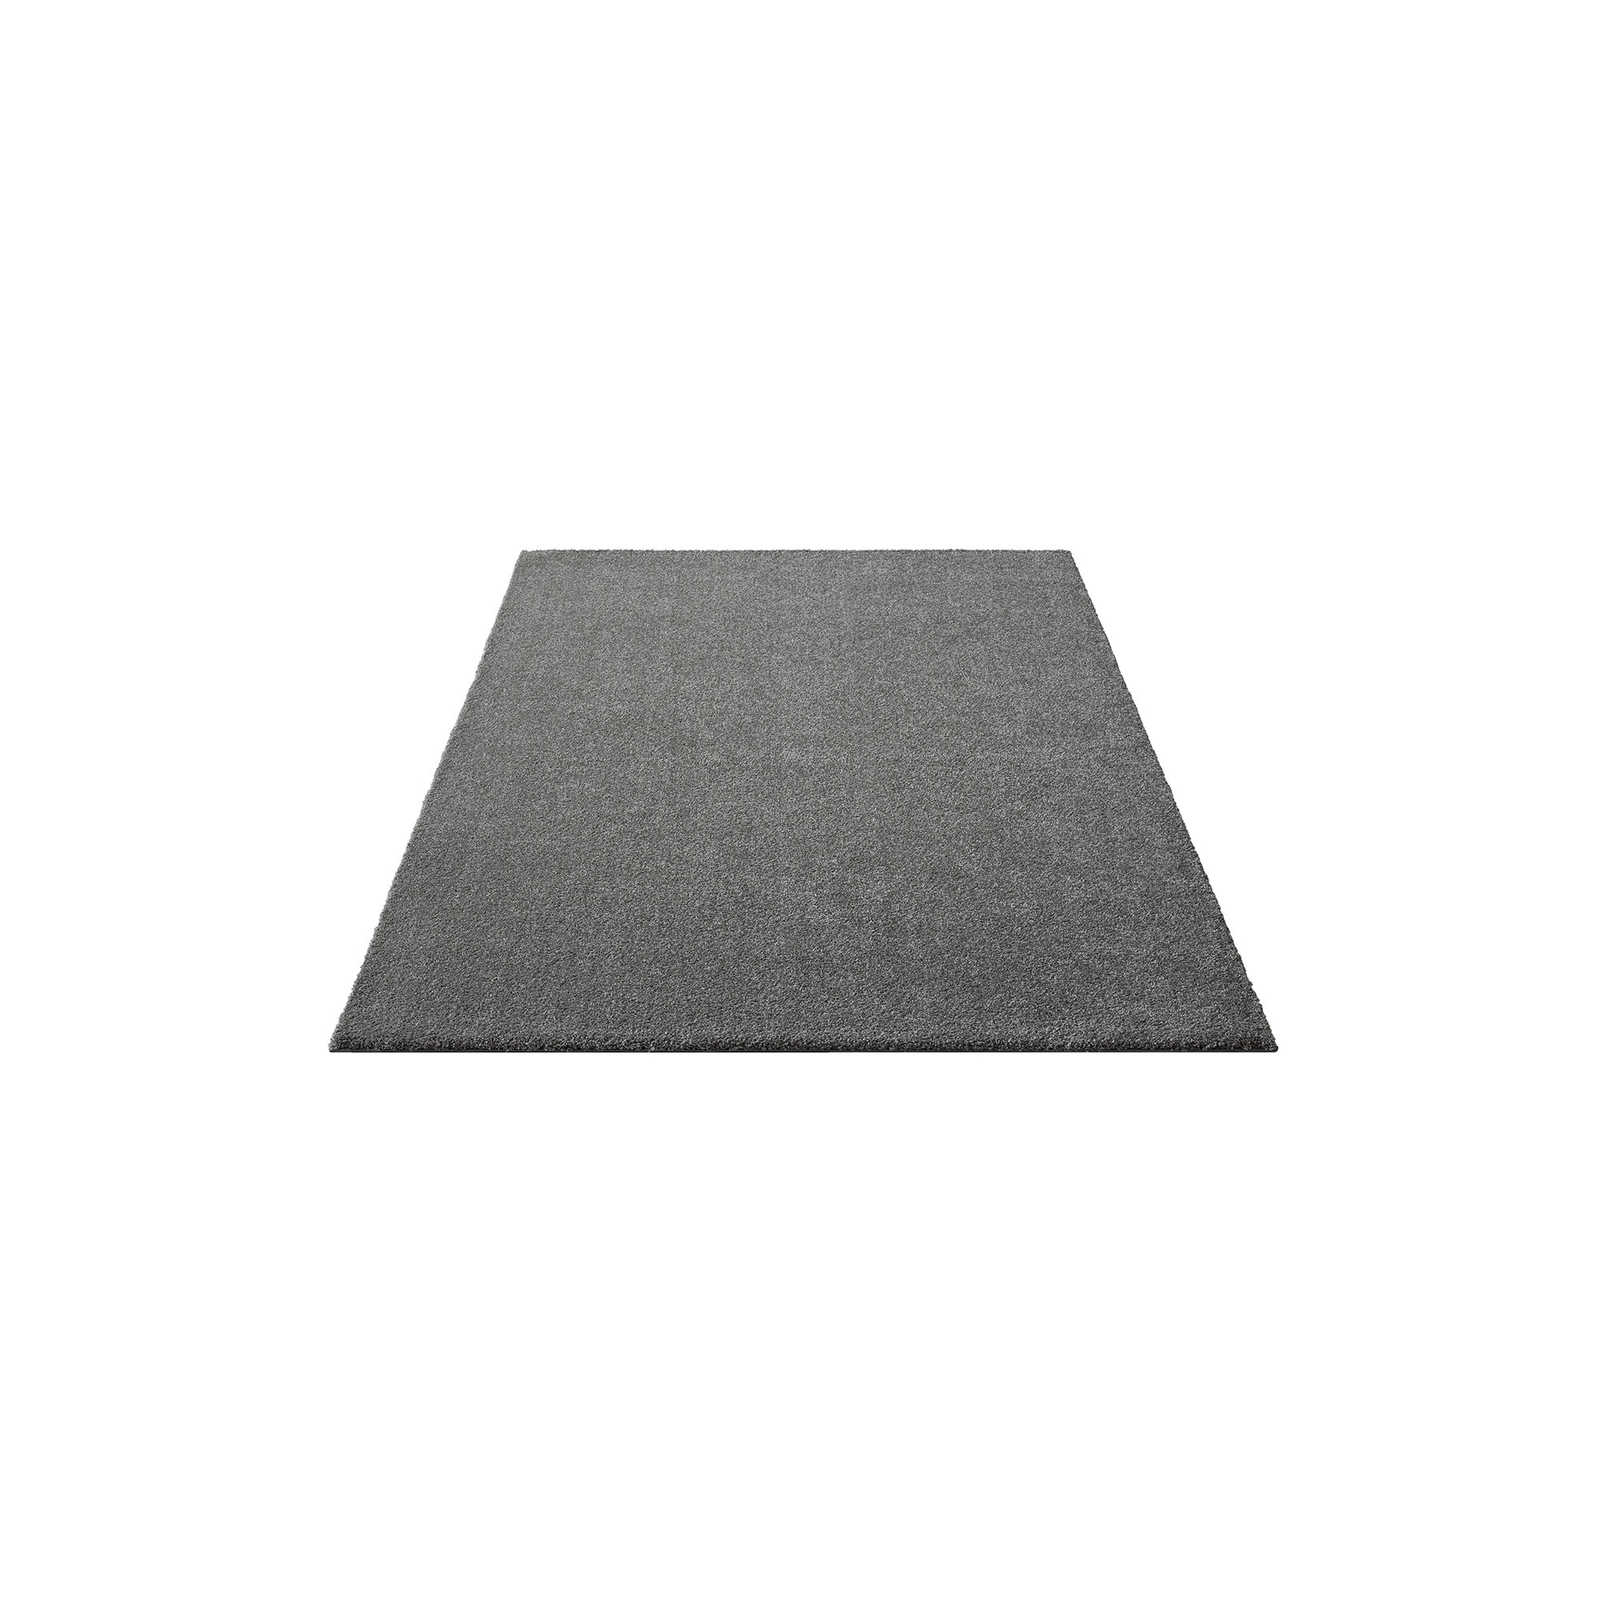 Fluffy short pile carpet in grey - 170 x 120 cm
